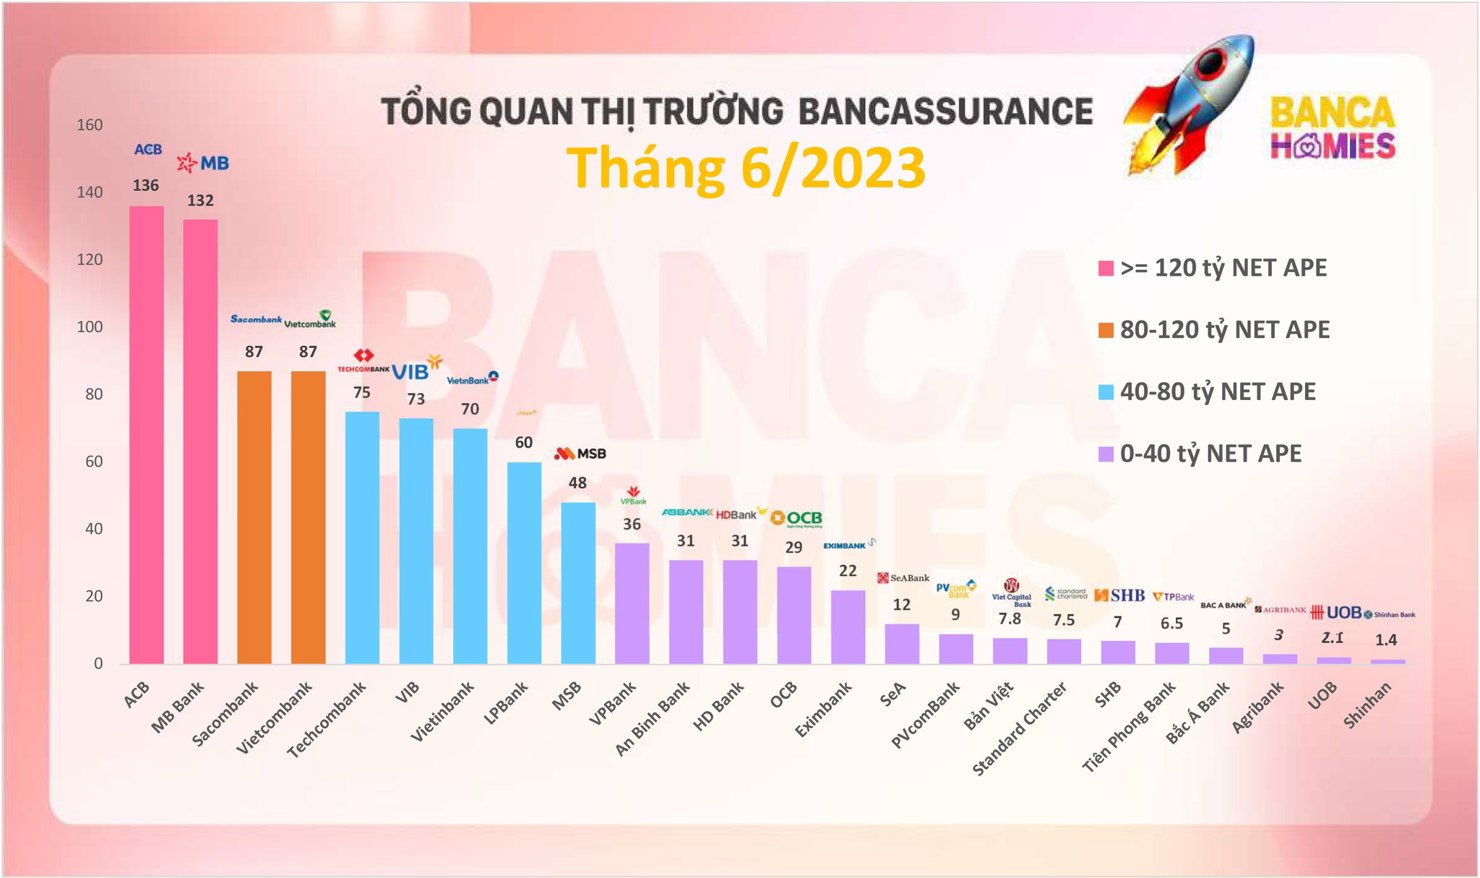 Tổng quan thị trường Bancassurance th&aacute;ng 6/2022. Nguồn: Bancahomies